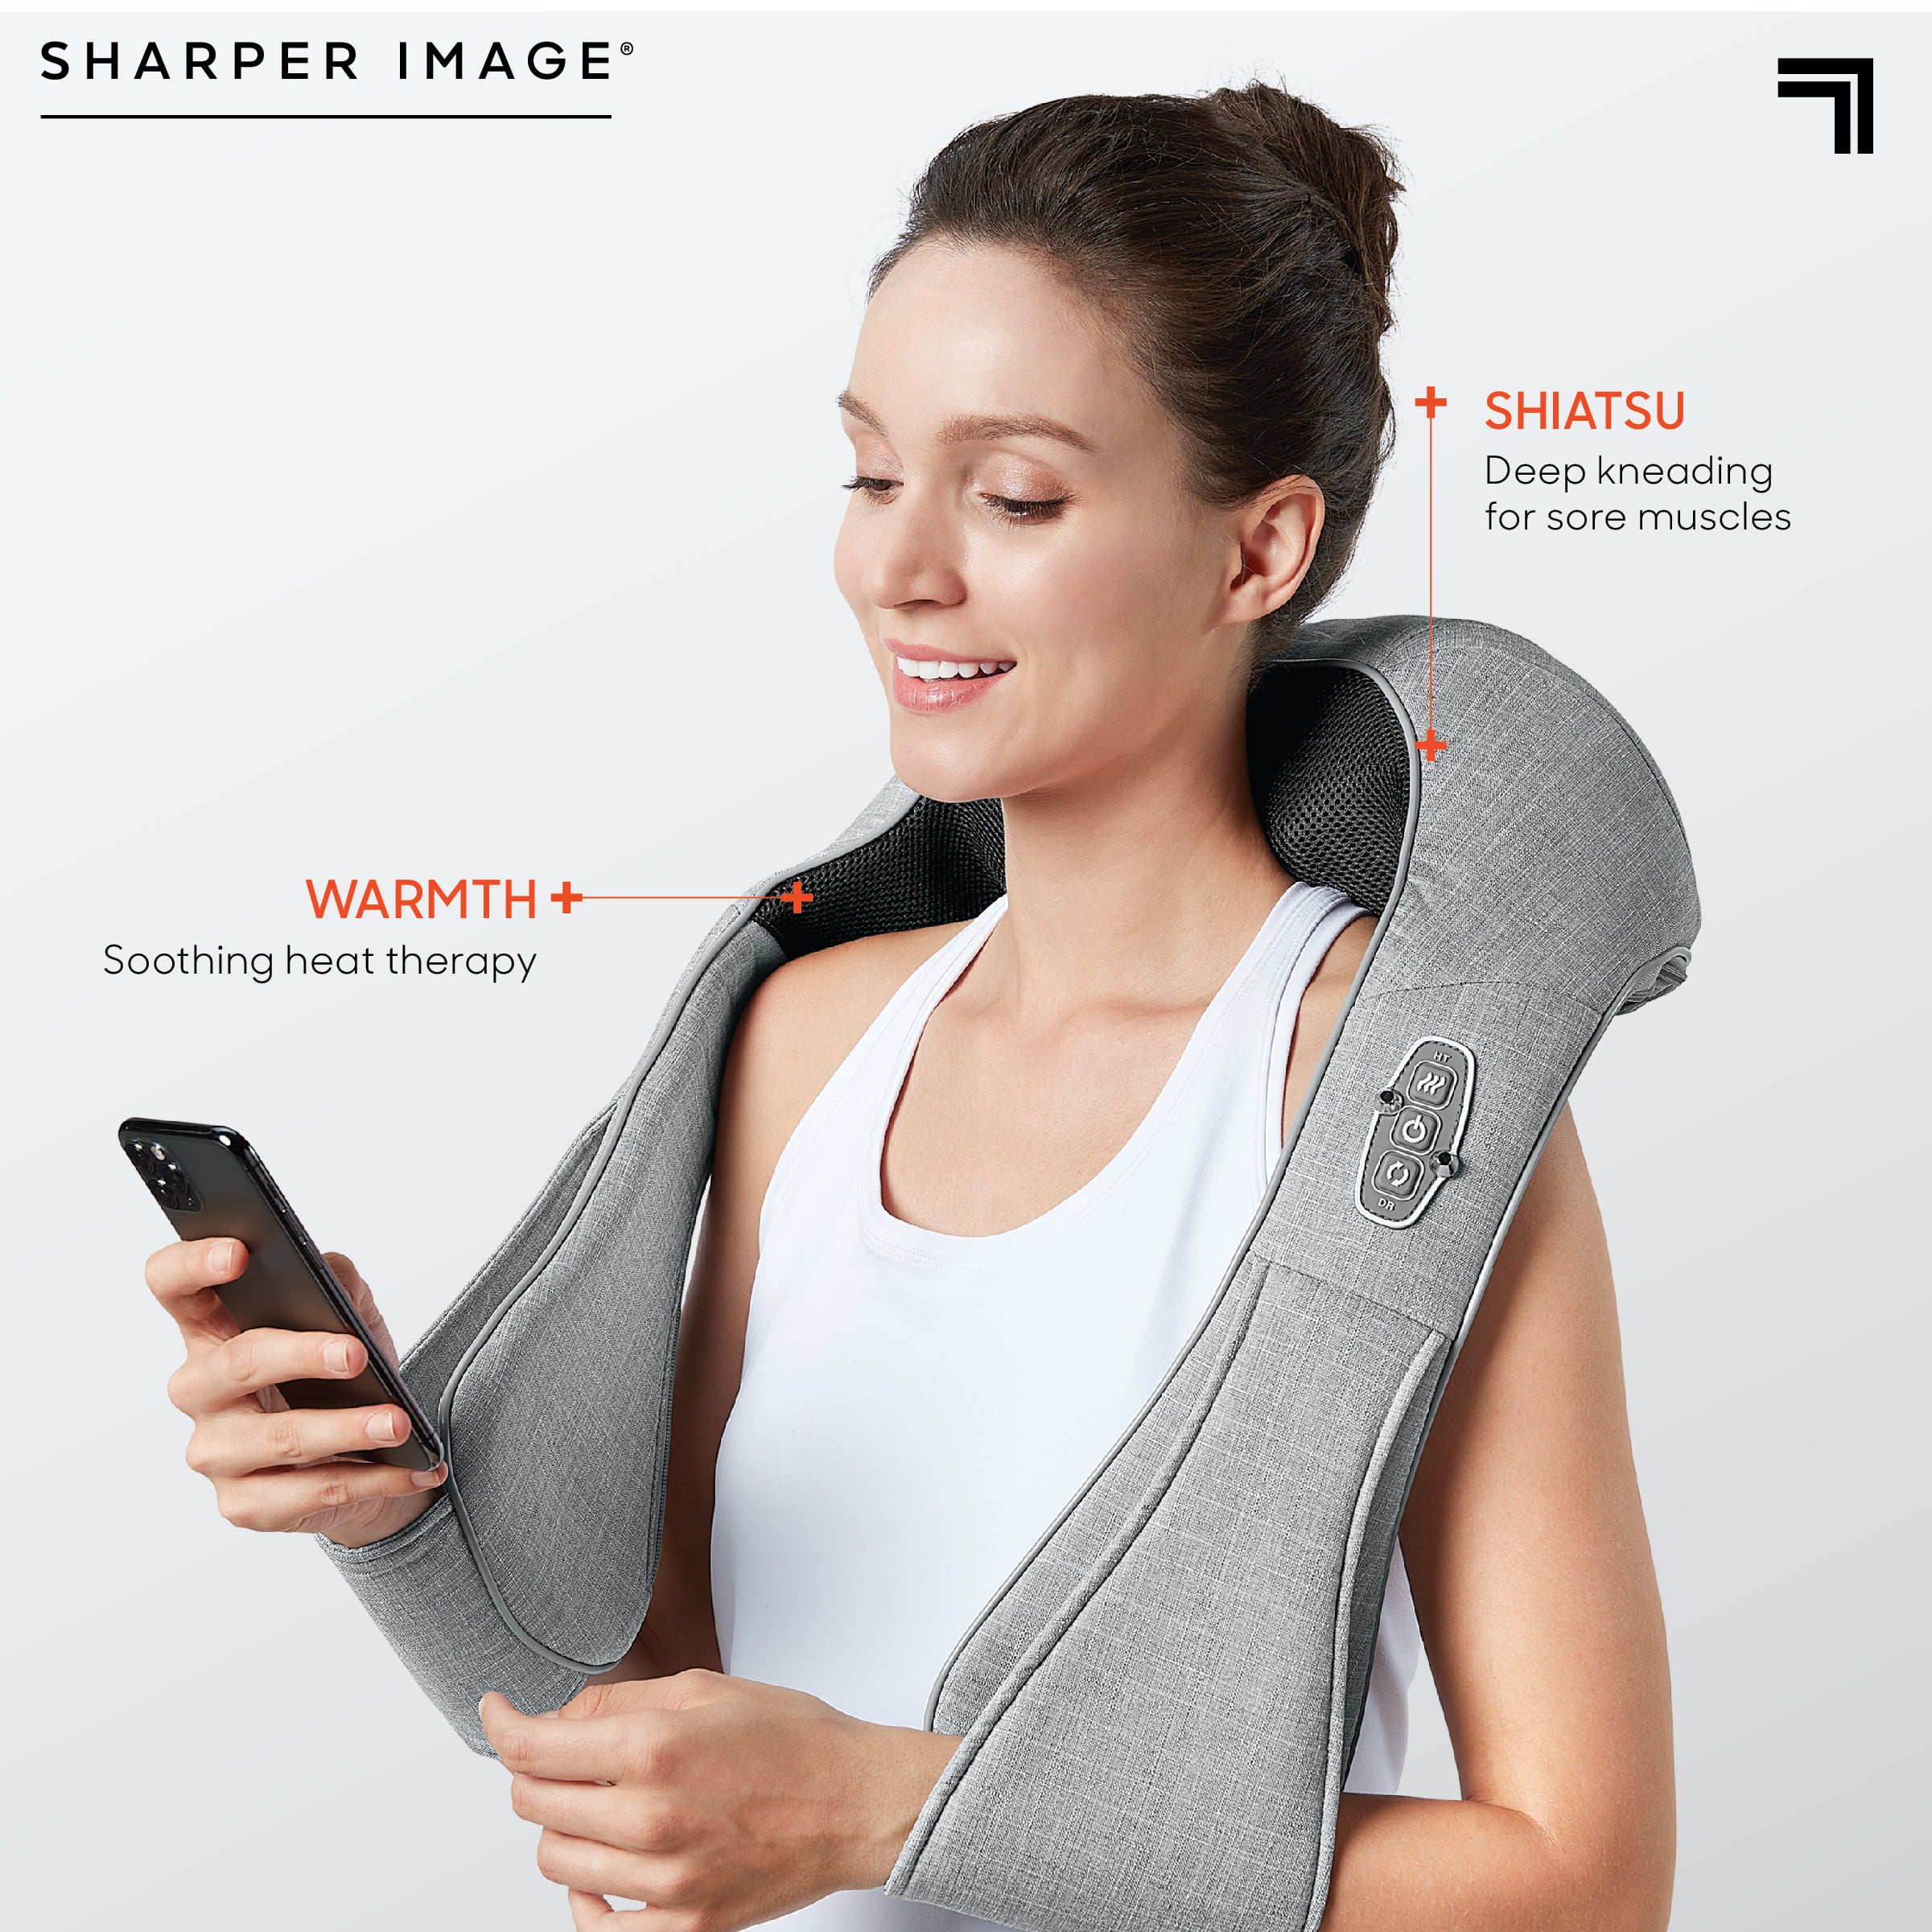 Sharper Image Shiatsu Neck + Back Kneading Massager, Rotating Massage Nodes  with Arm Straps for Pain…See more Sharper Image Shiatsu Neck + Back